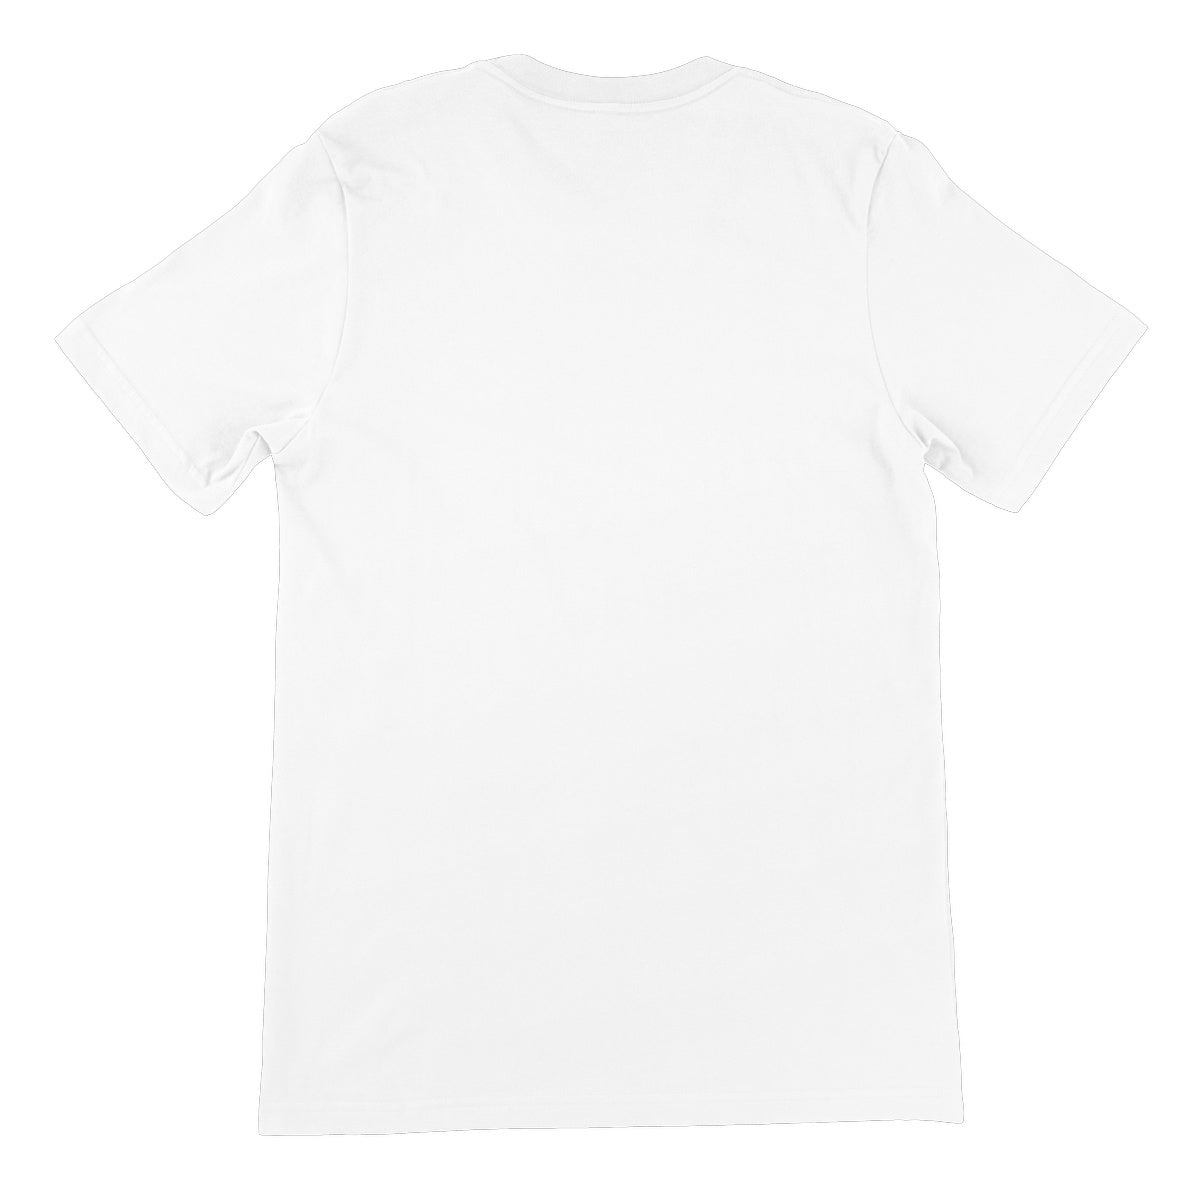 CxE REAL1 - ALL DAY Unisex Short Sleeve T-Shirt